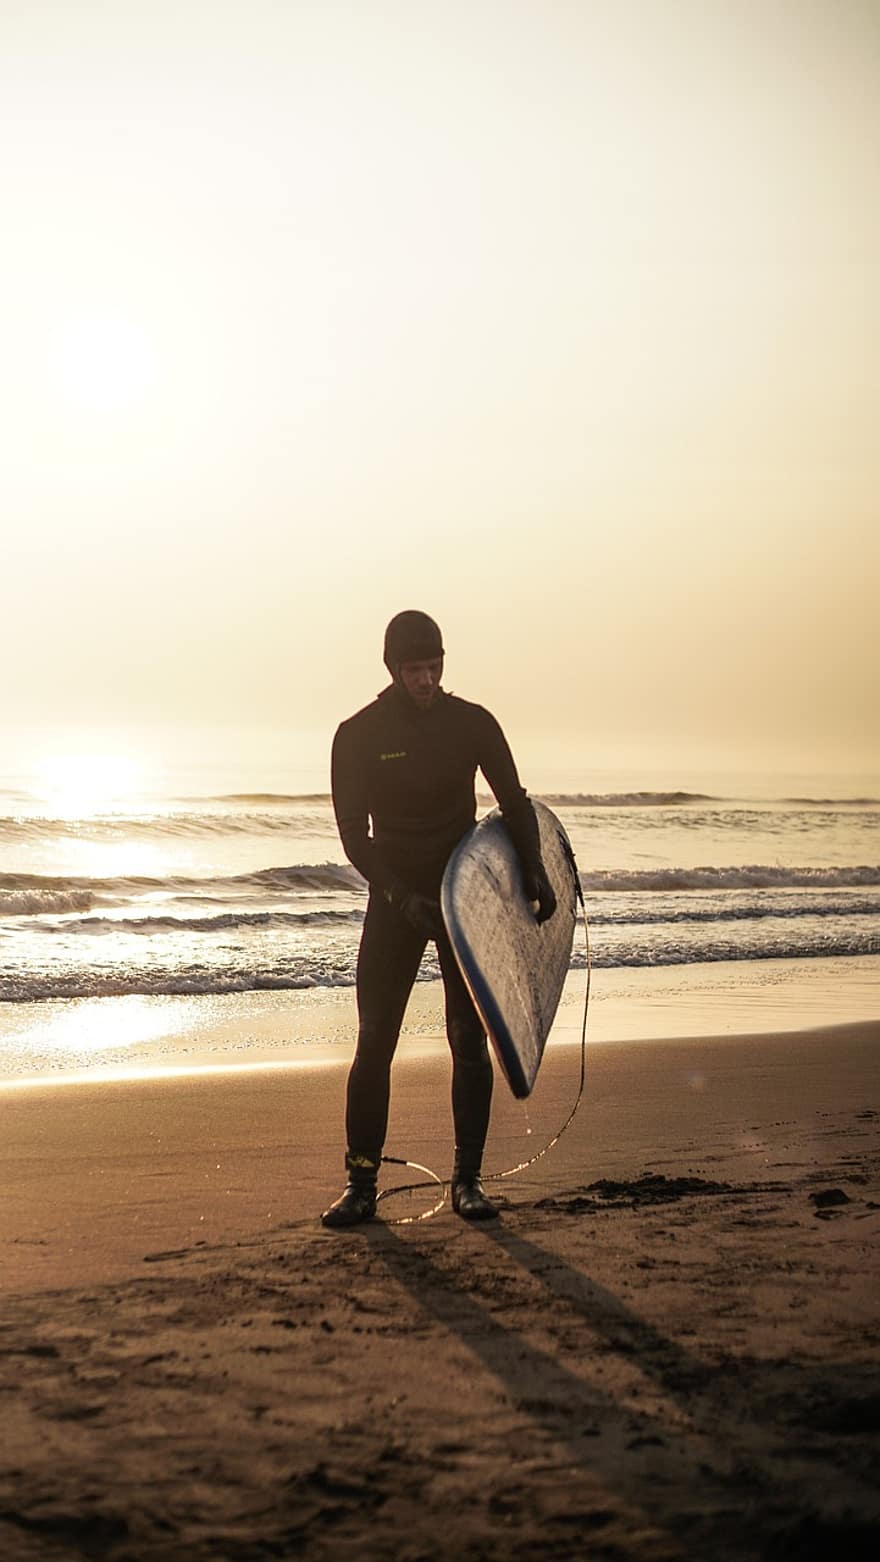 surfe, de praia, por do sol, surfista, surfar, mar, homens, prancha de surfe, adulto, uma pessoa, estilos de vida